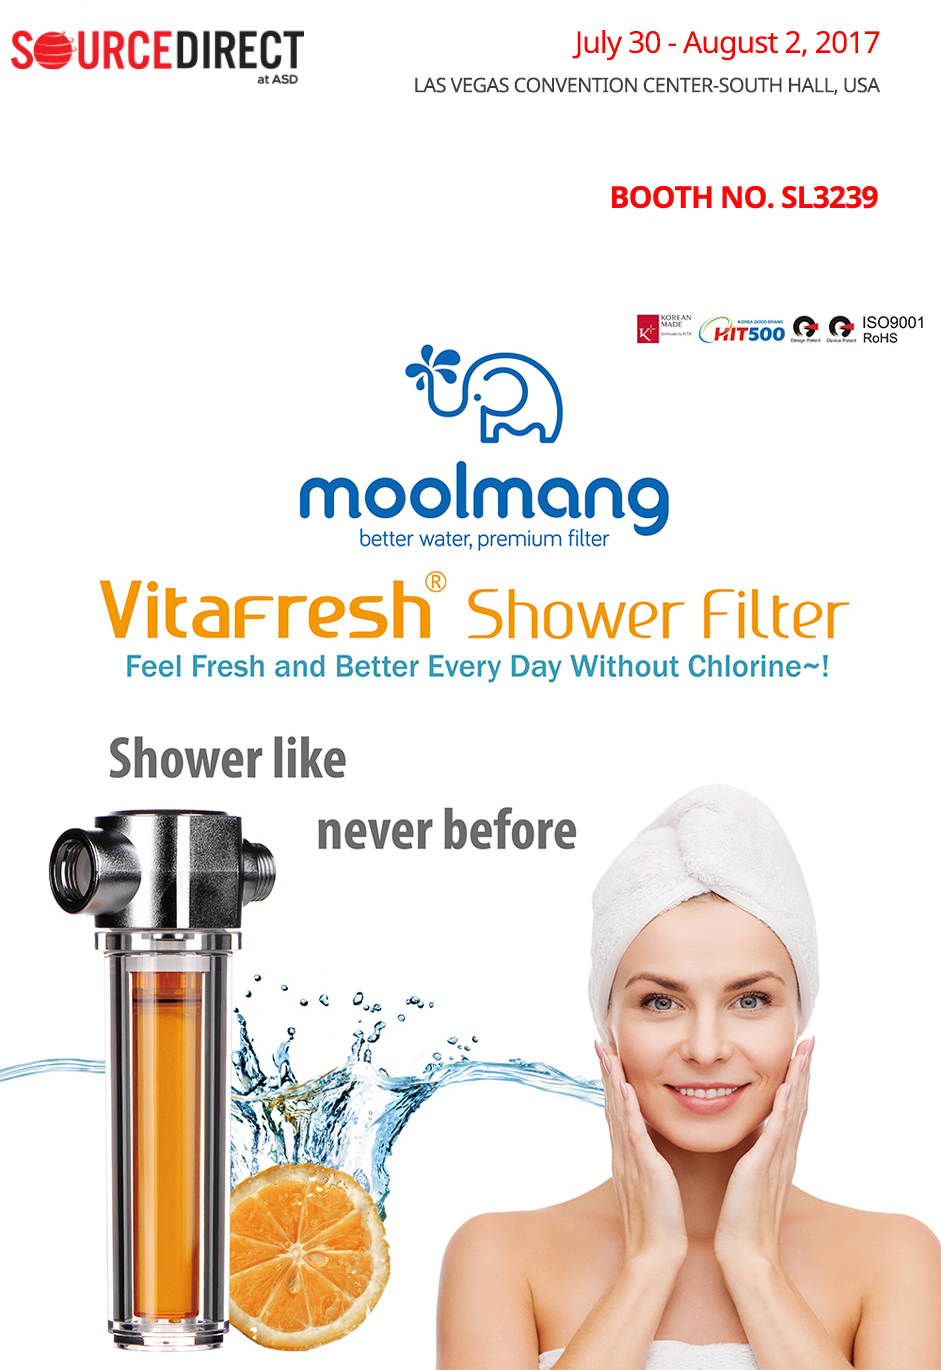 sourcedirect at asd trade show moolmang vitafresh advanced shower filter